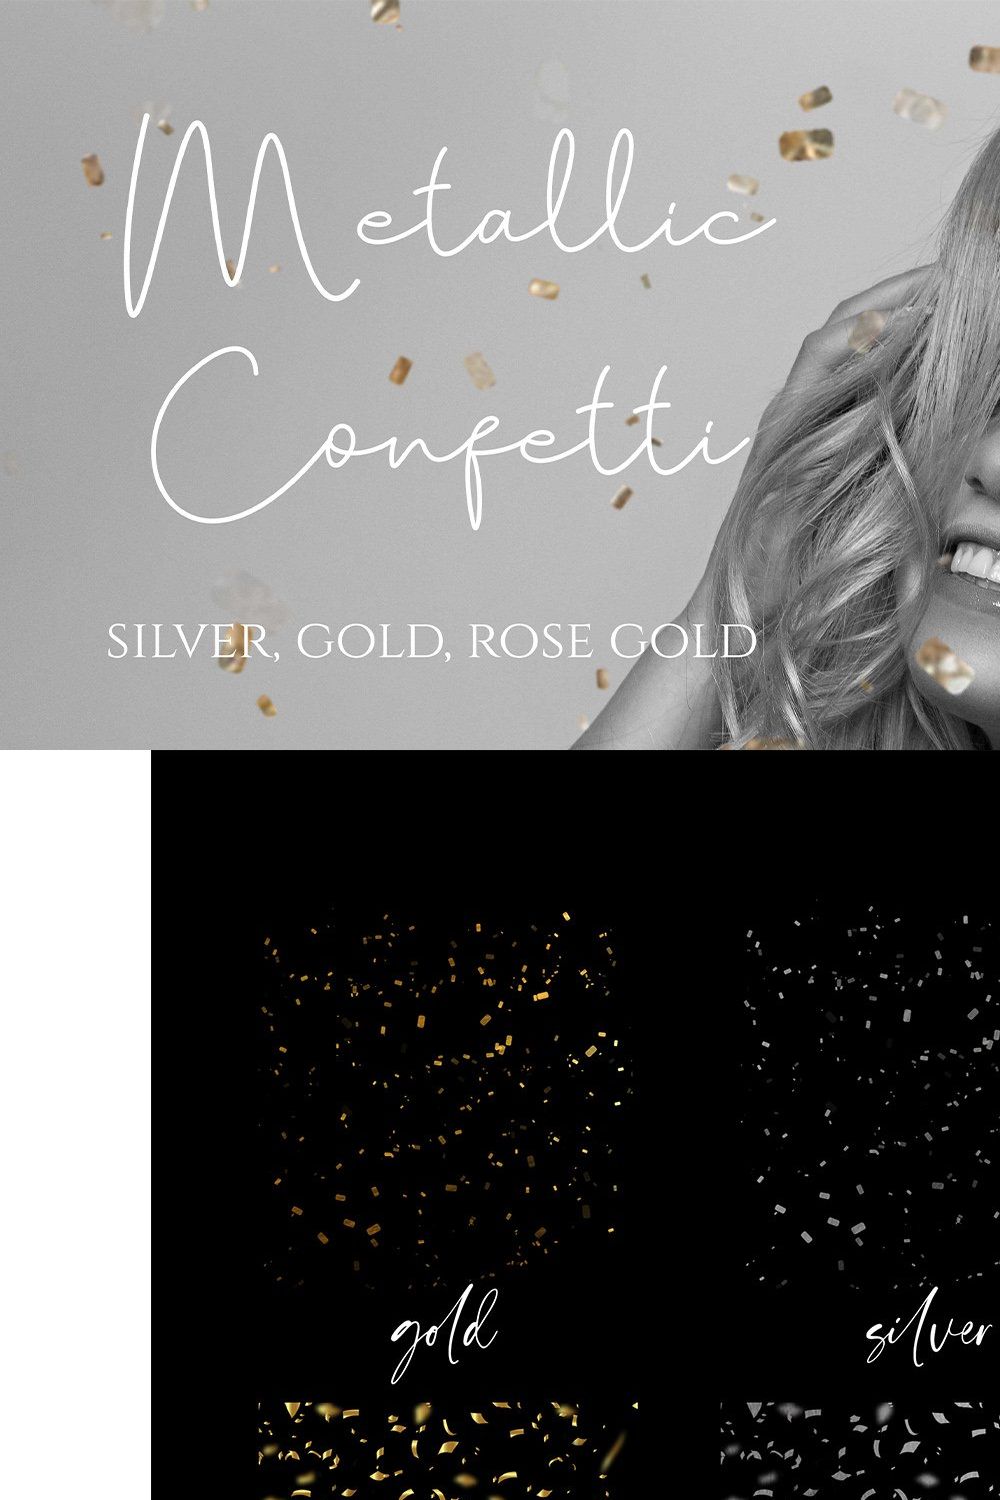 Metallic Confetti Digital Overlays pinterest preview image.